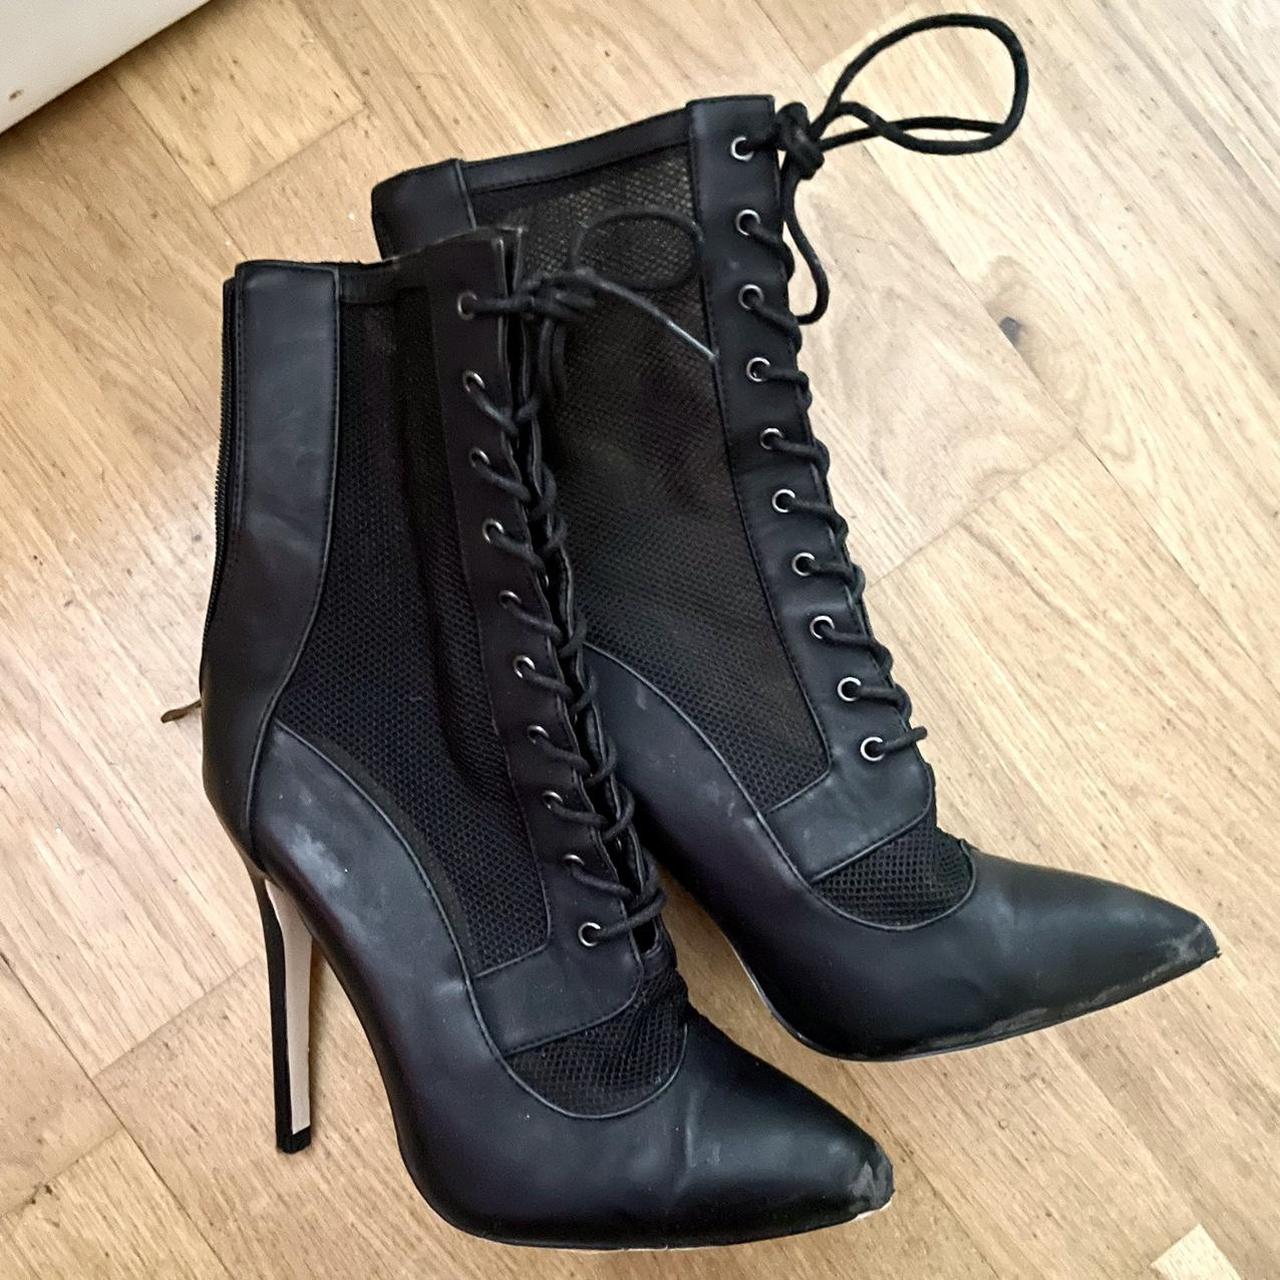 Black mesh lace stiletto heels boots - Depop